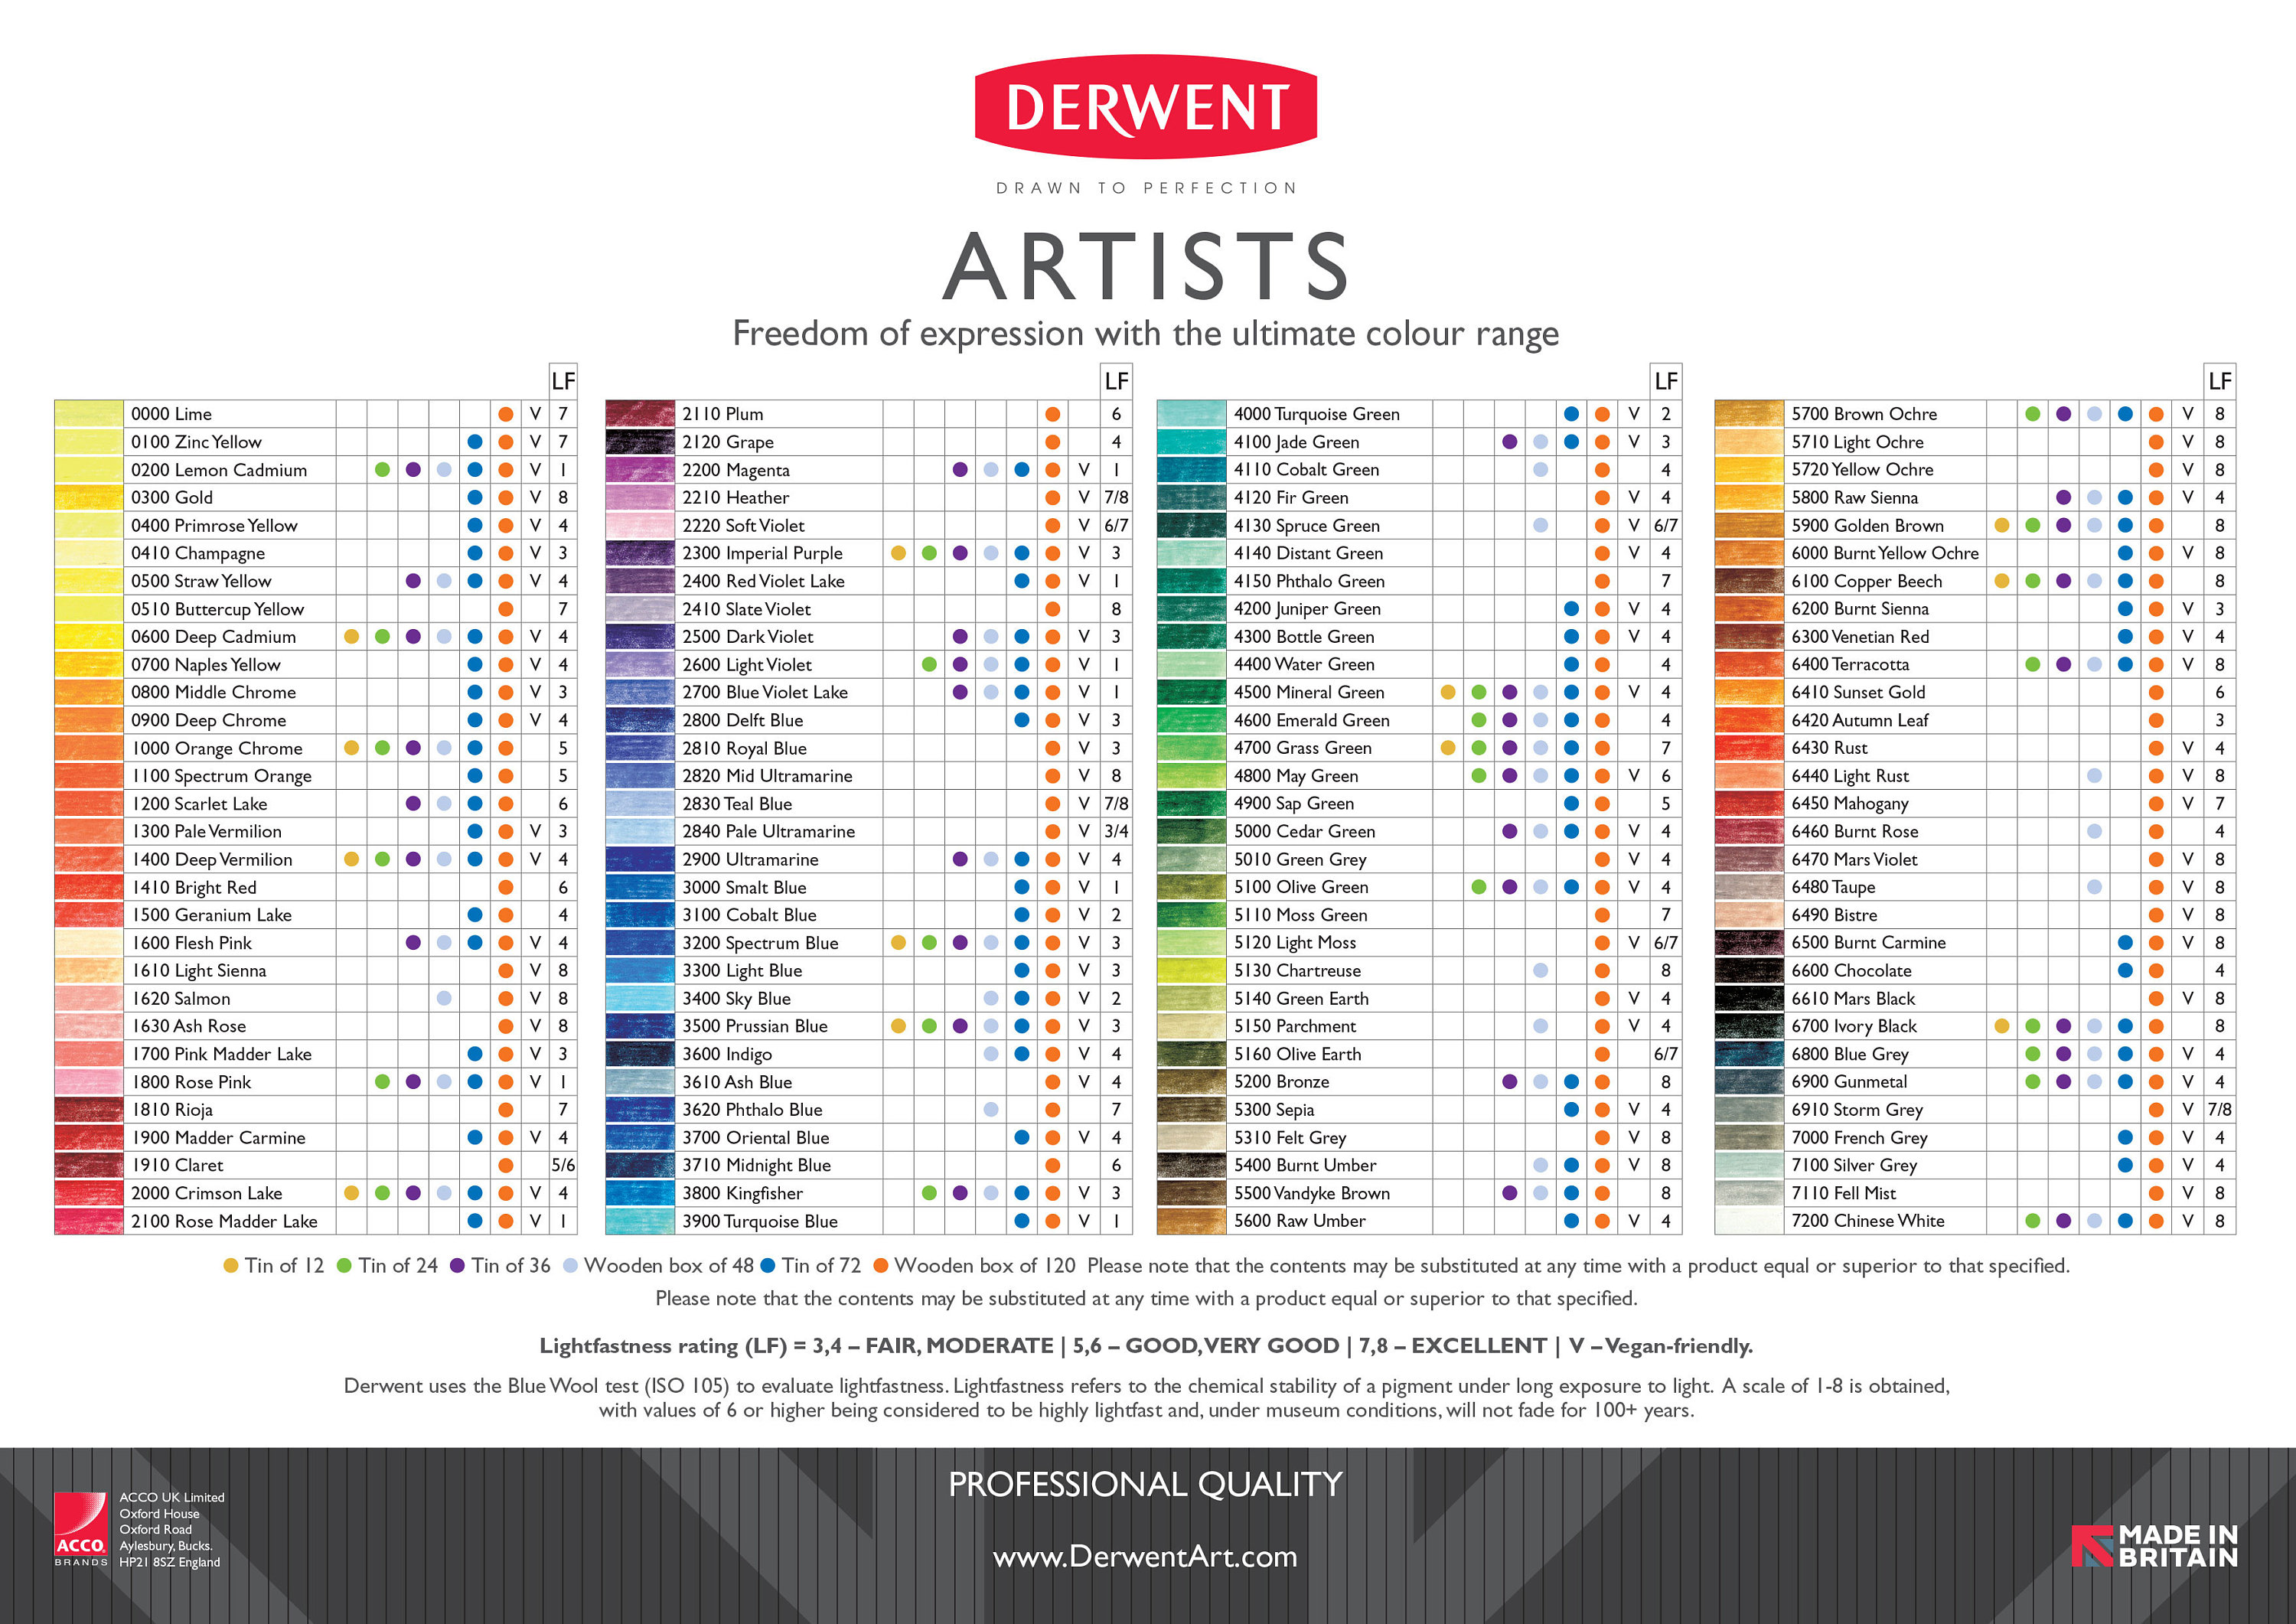 Derwent Drawing Pencils Individual - Solway Blue